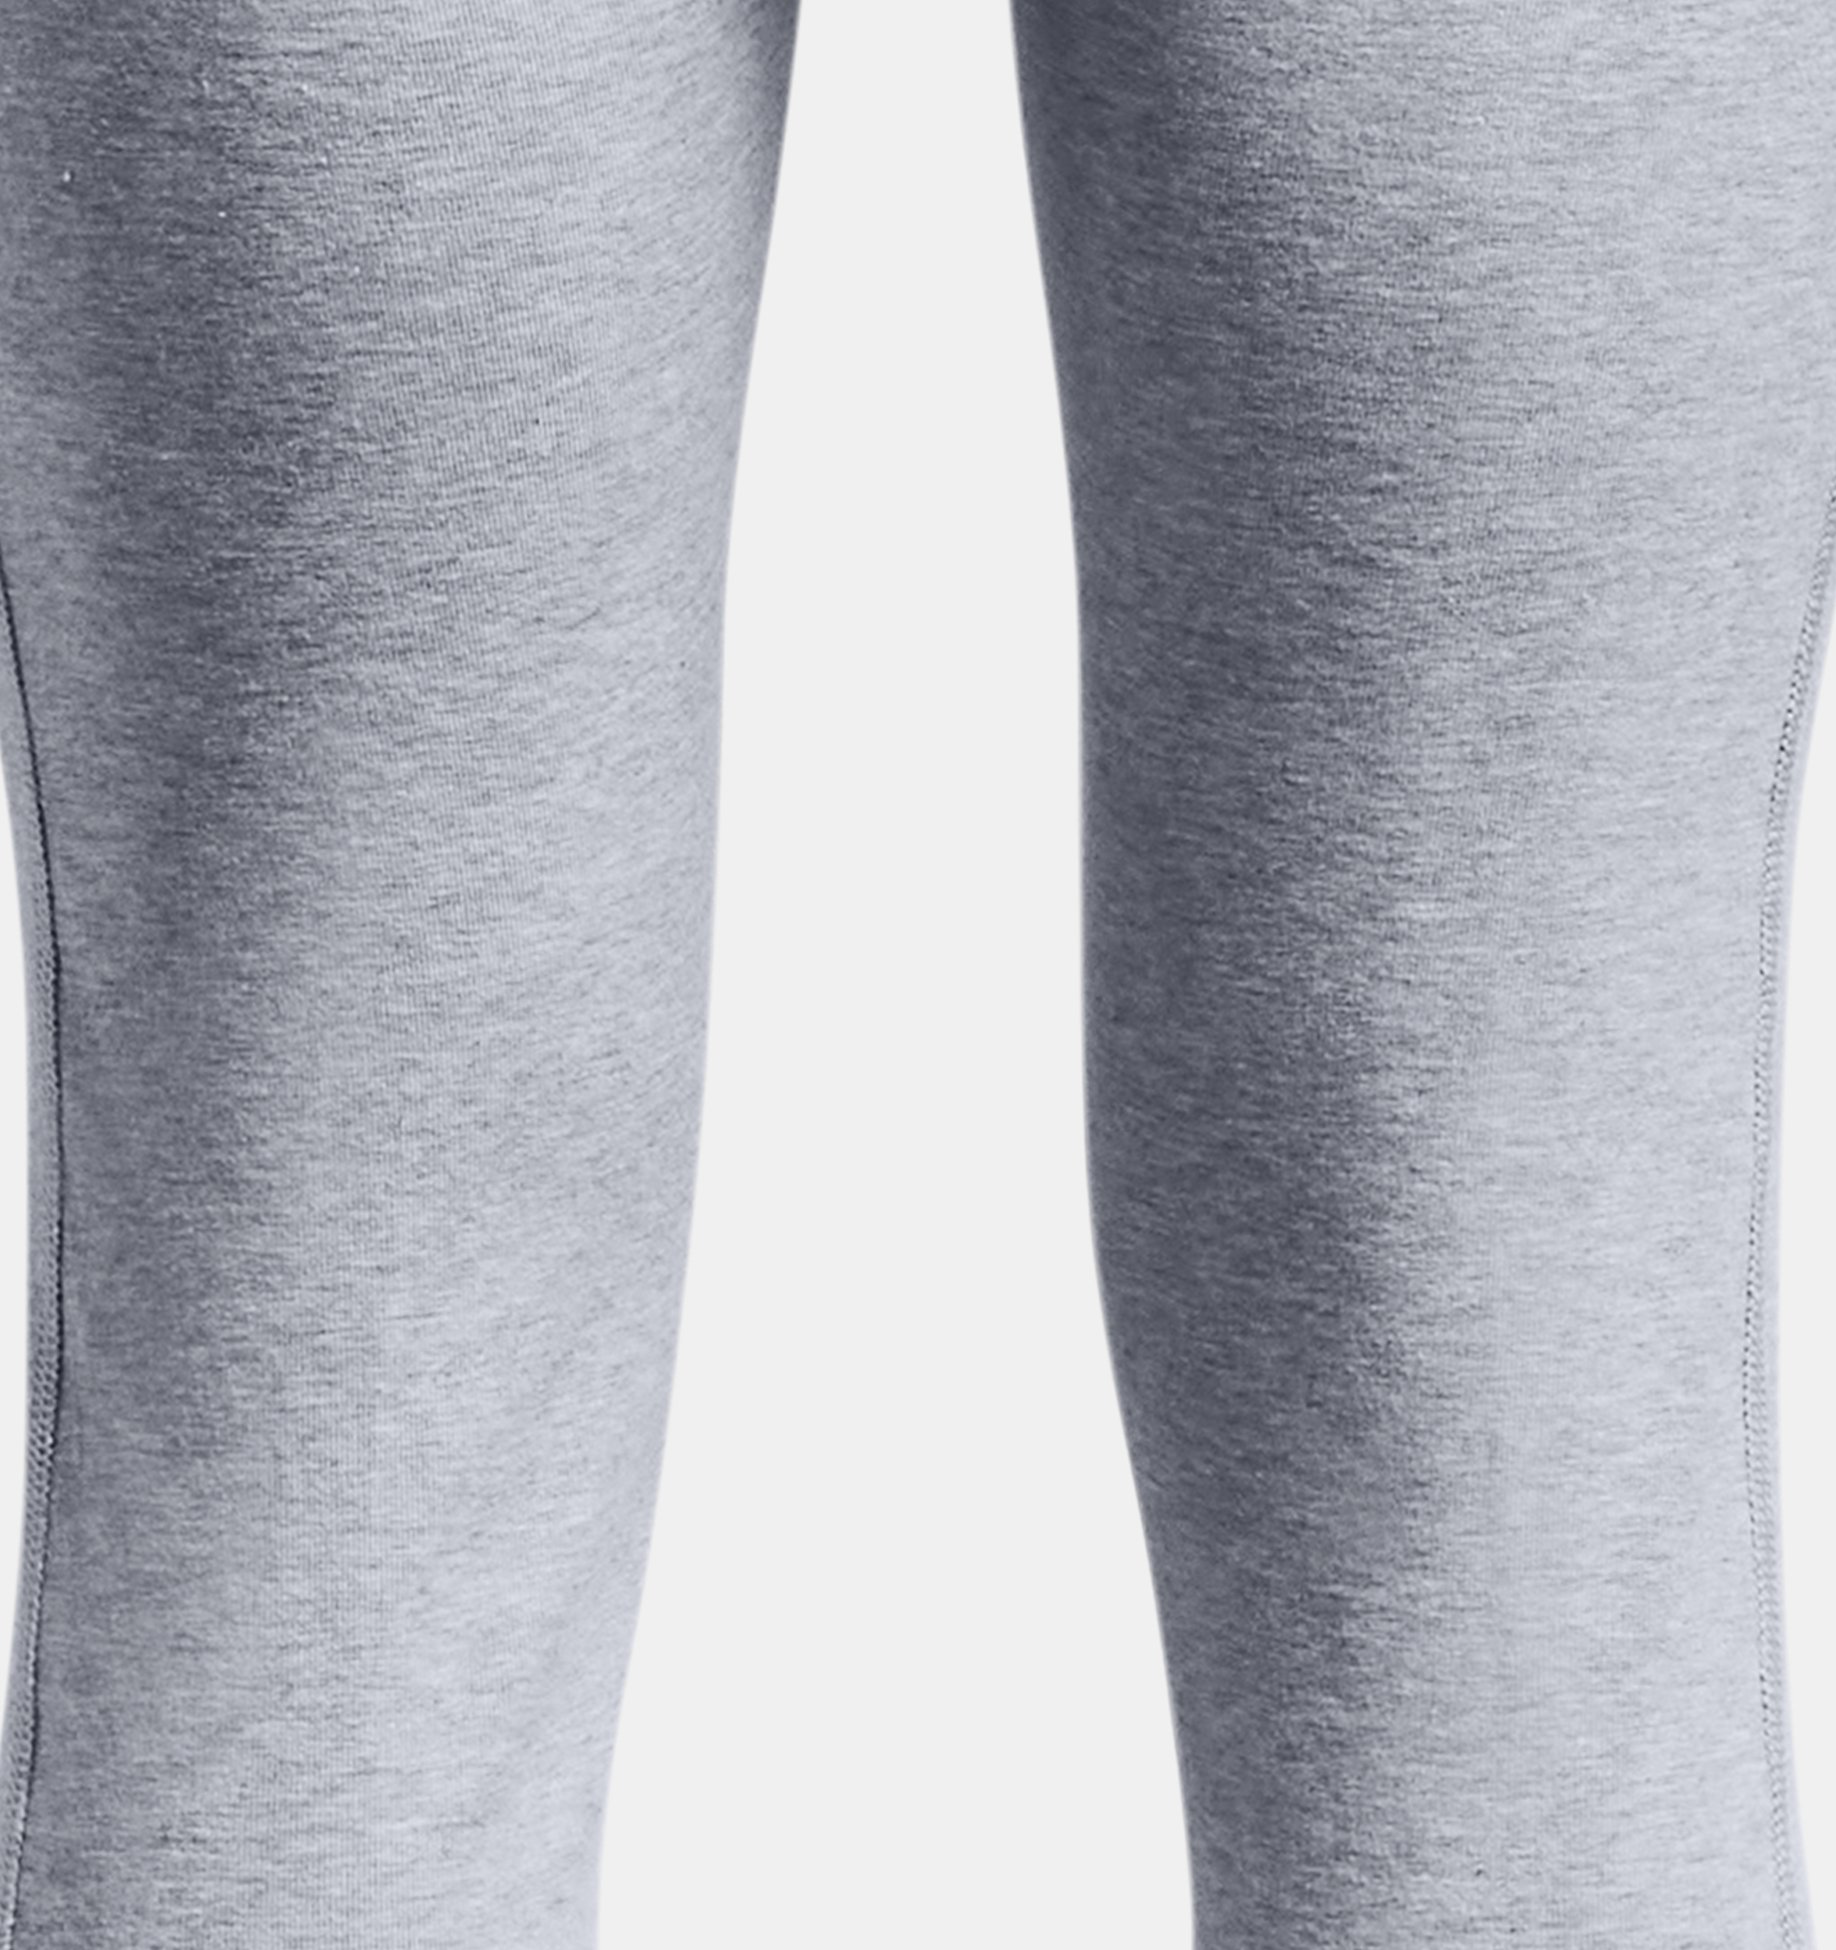 Girls Under Armour long sleeve &long leggings set size 6X(NWT) - Girls tops  & t-shirts